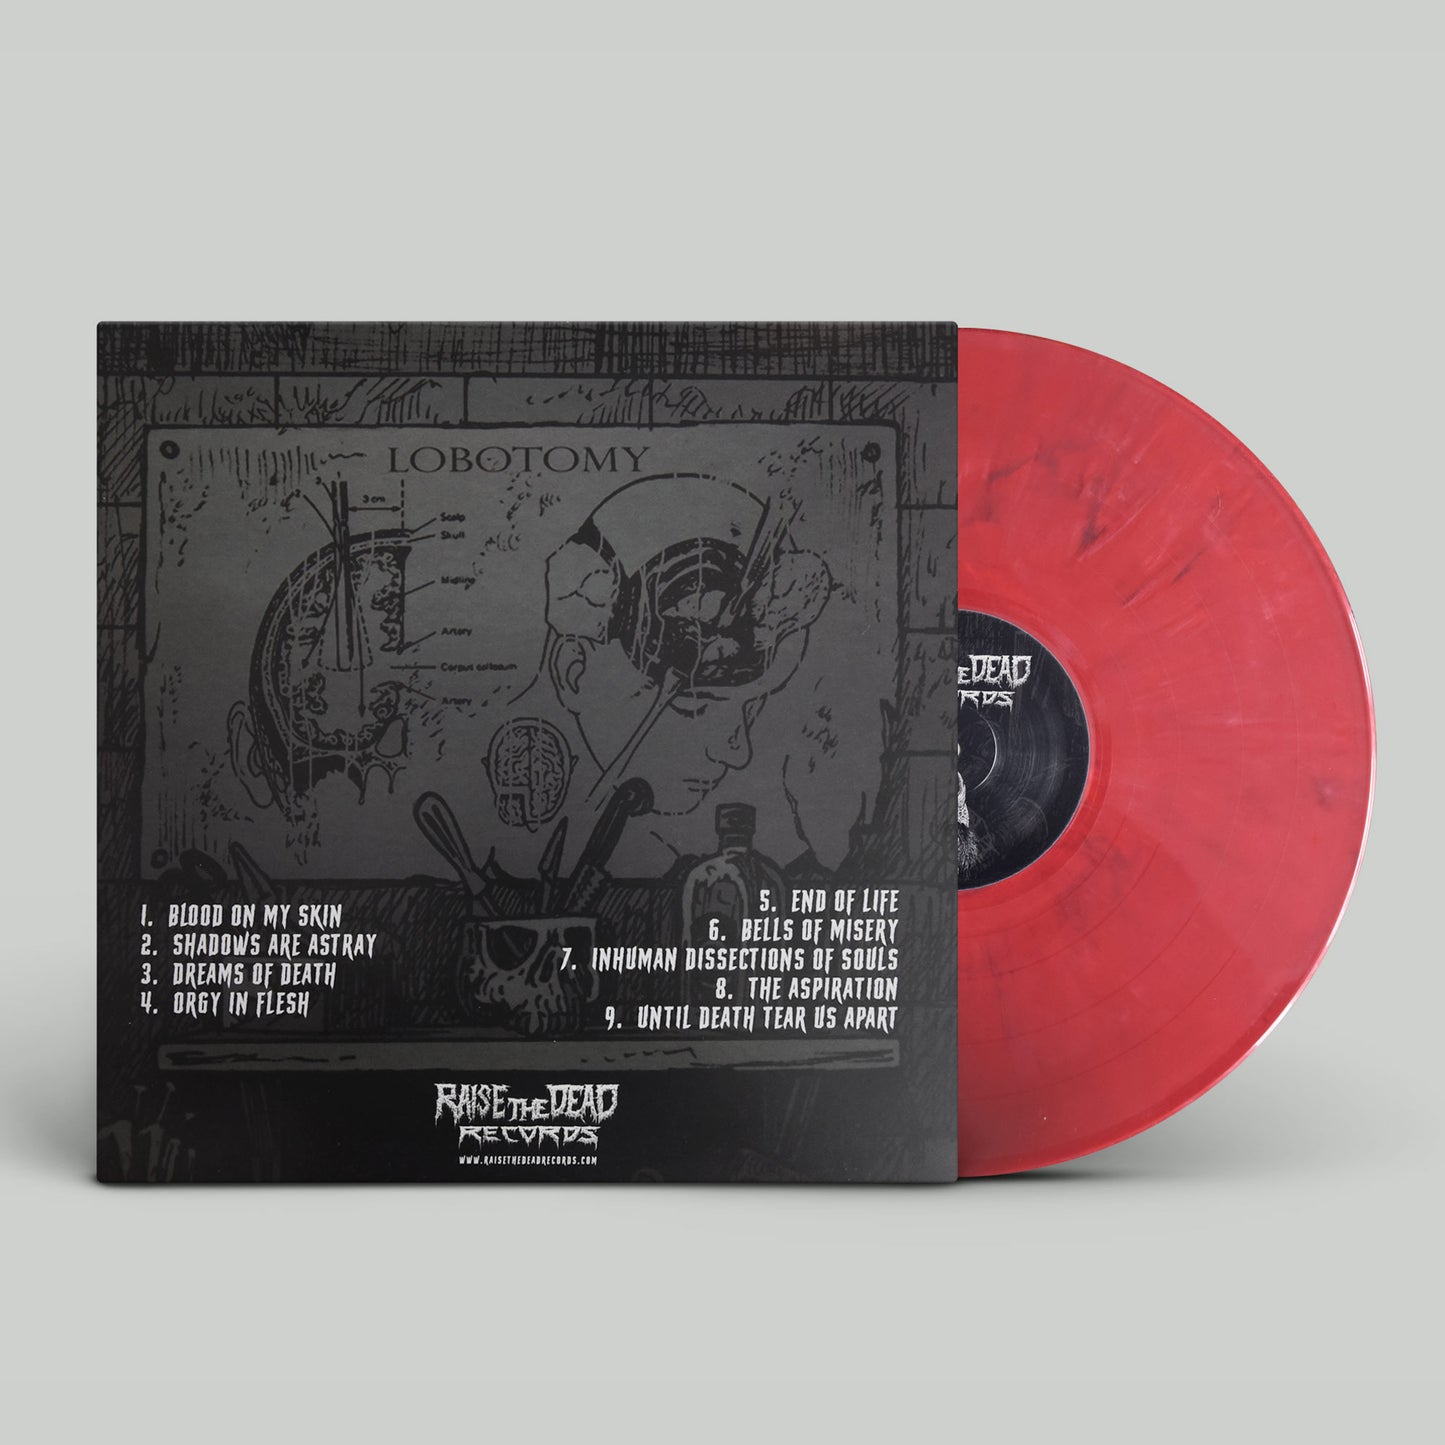 Centinex - Subconscious Lobotomy LP